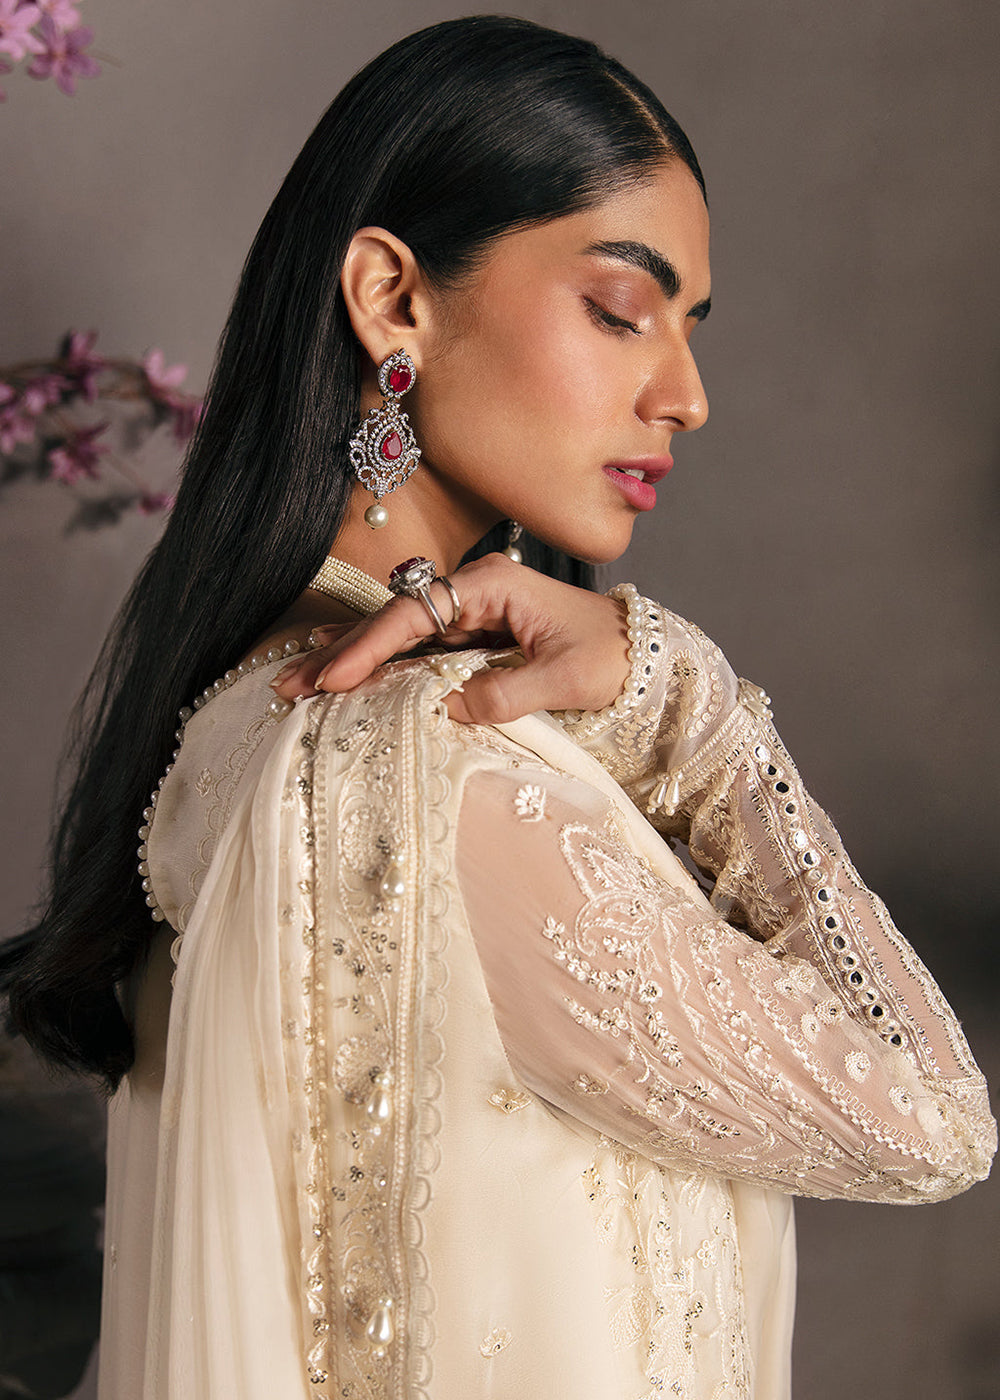 Buy Now Off White Pakistani Salwar Suit - Afrozeh La Fuchsia Formals '23 - Daisy Glow Online in USA, UK, Canada & Worldwide at Empress Clothing.